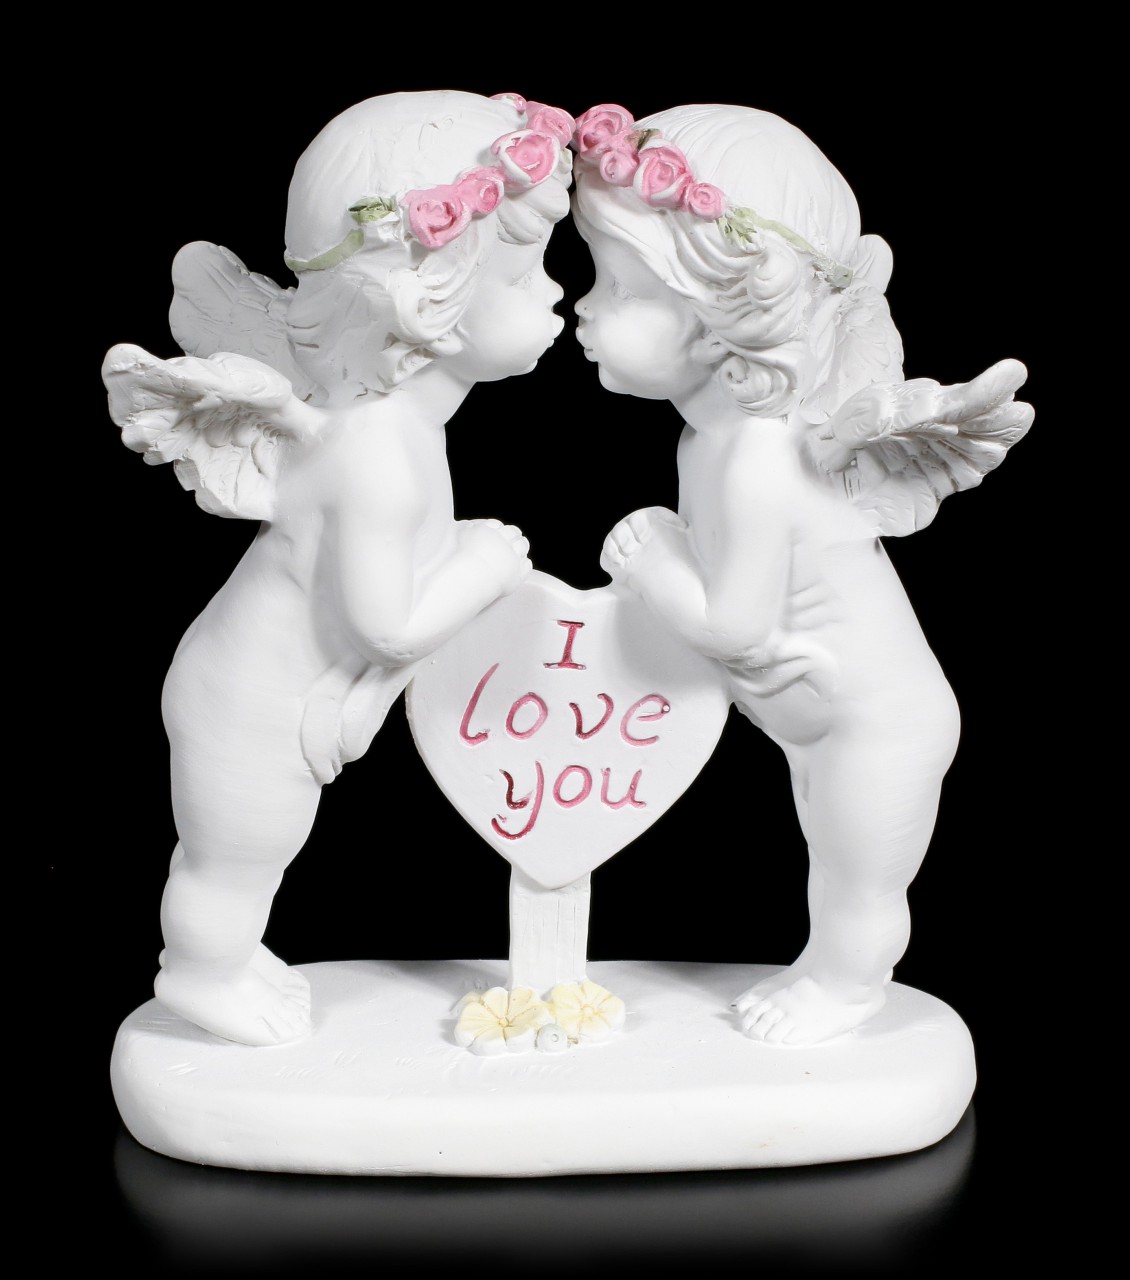 Two white Cherubim Figurines - I Love You